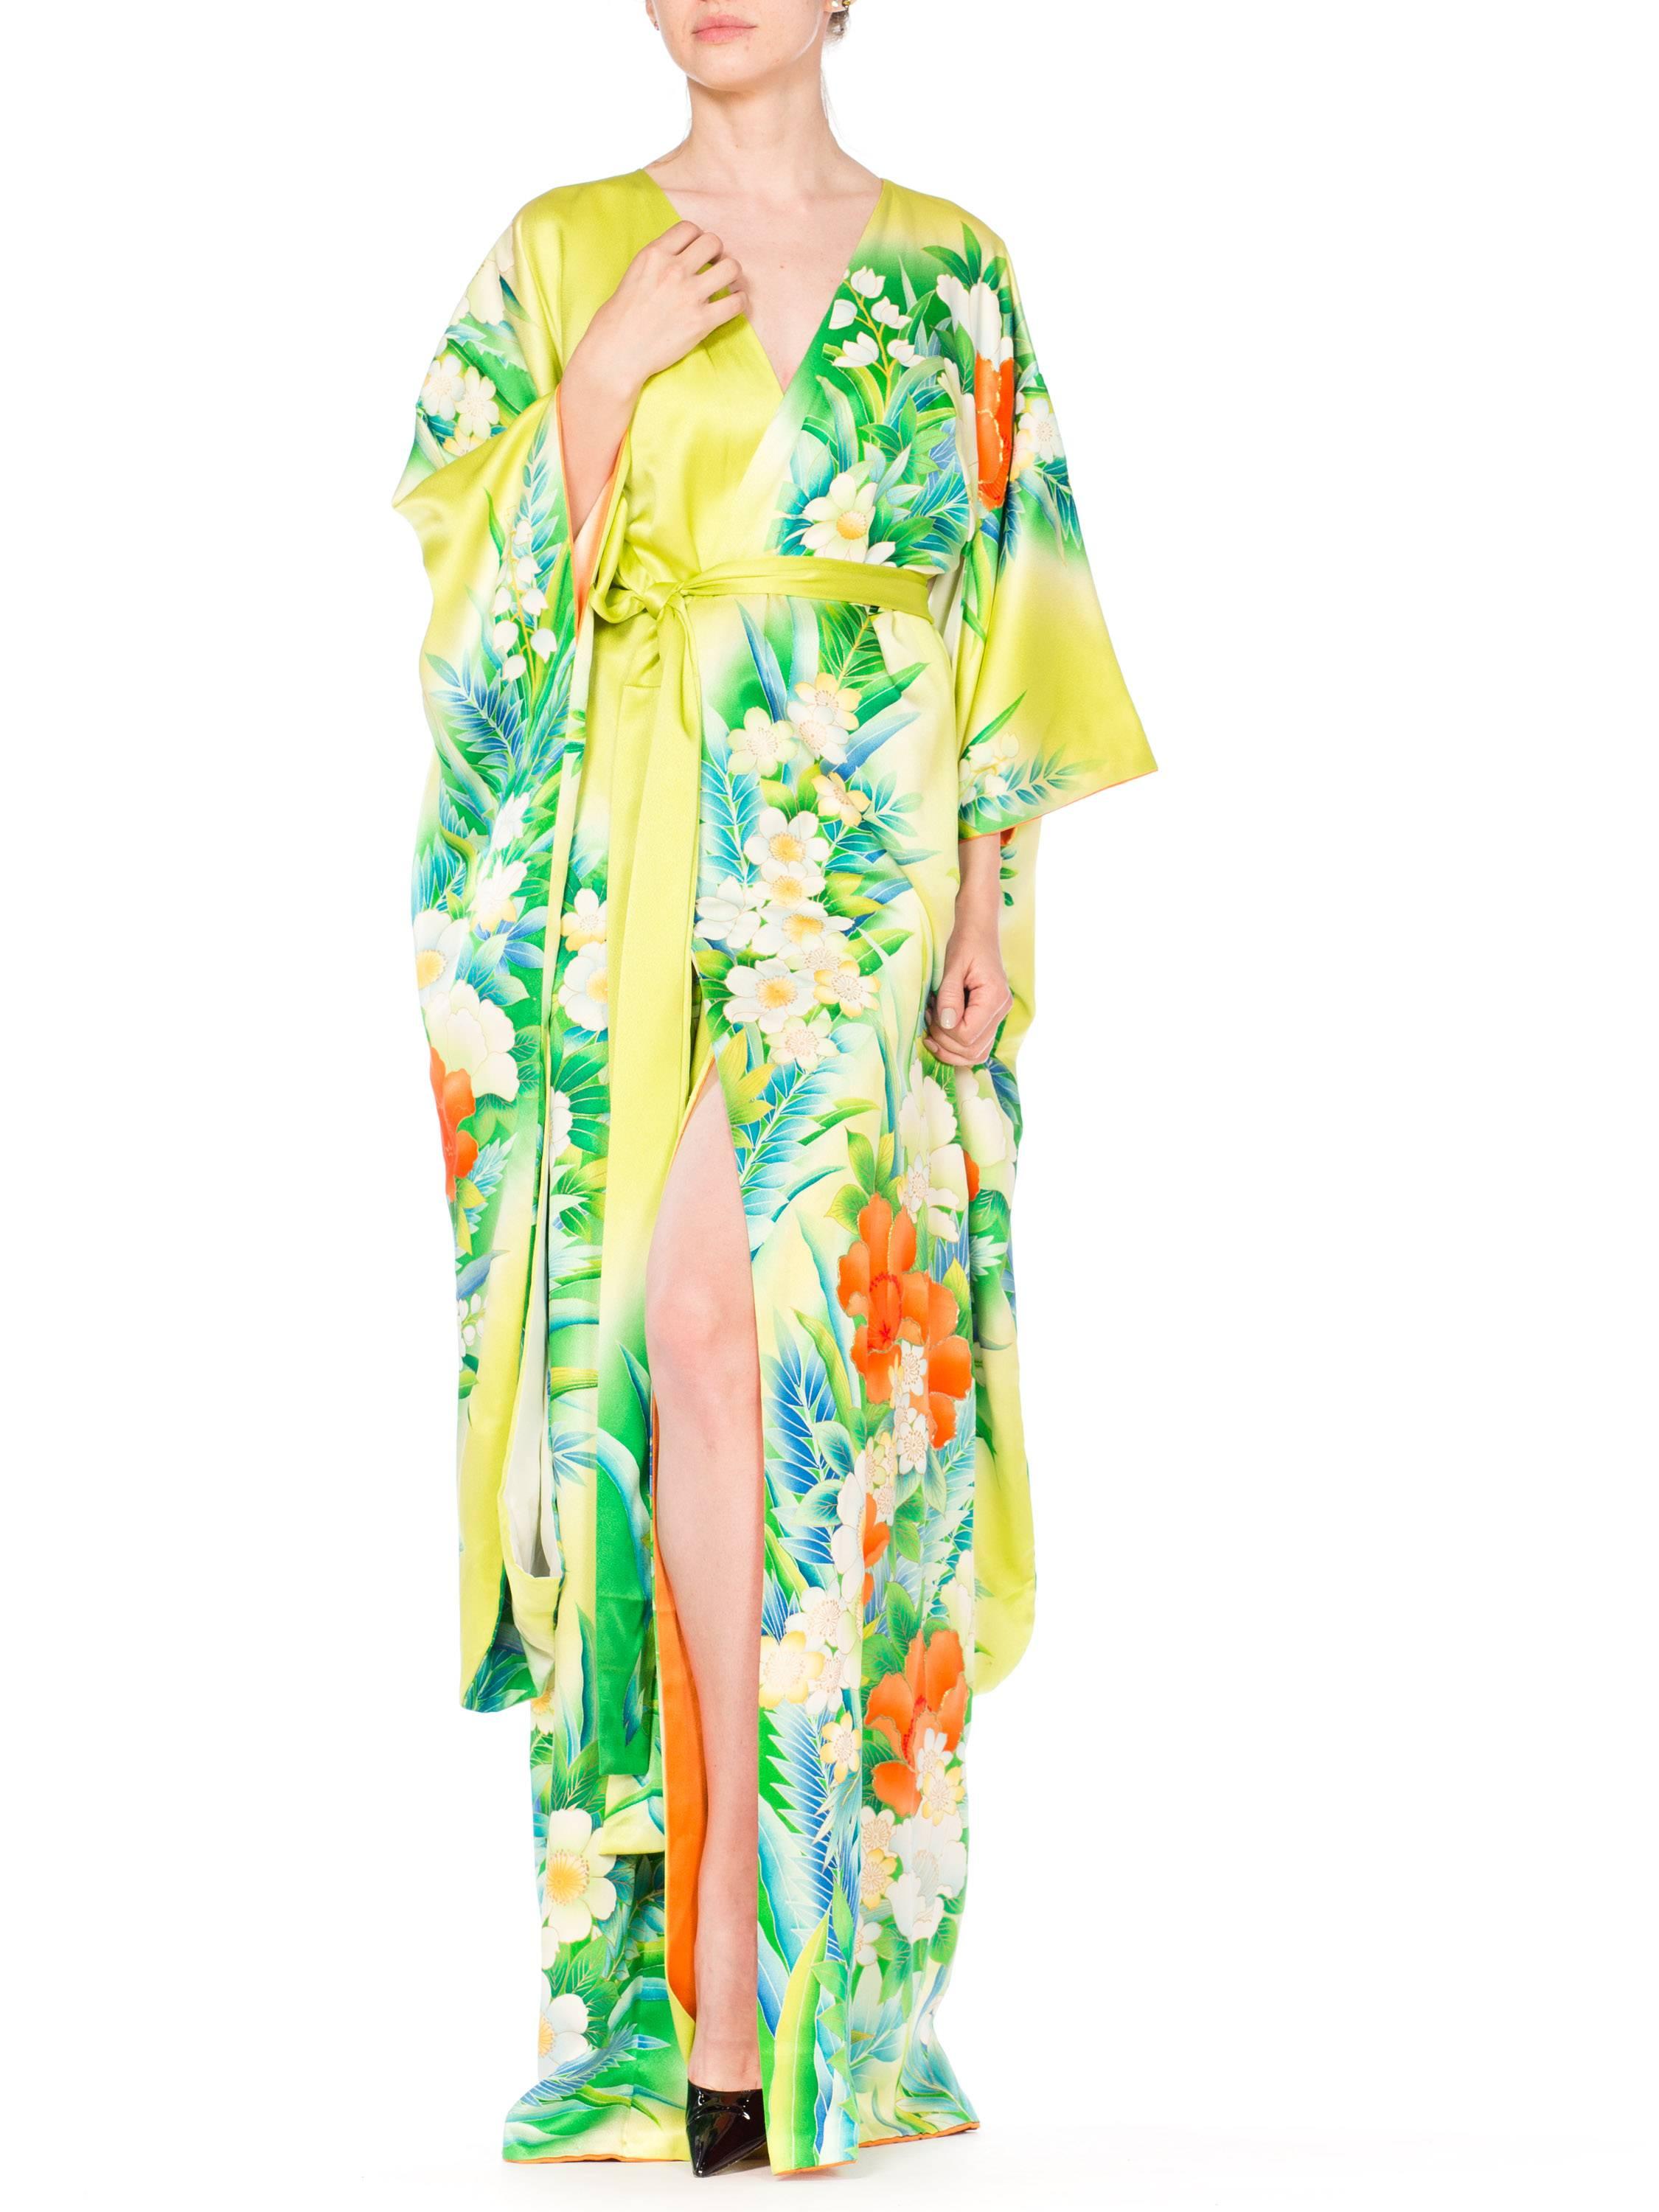 Morphew Collection Tropical Hand Painted Japanese Kimono Dress 3